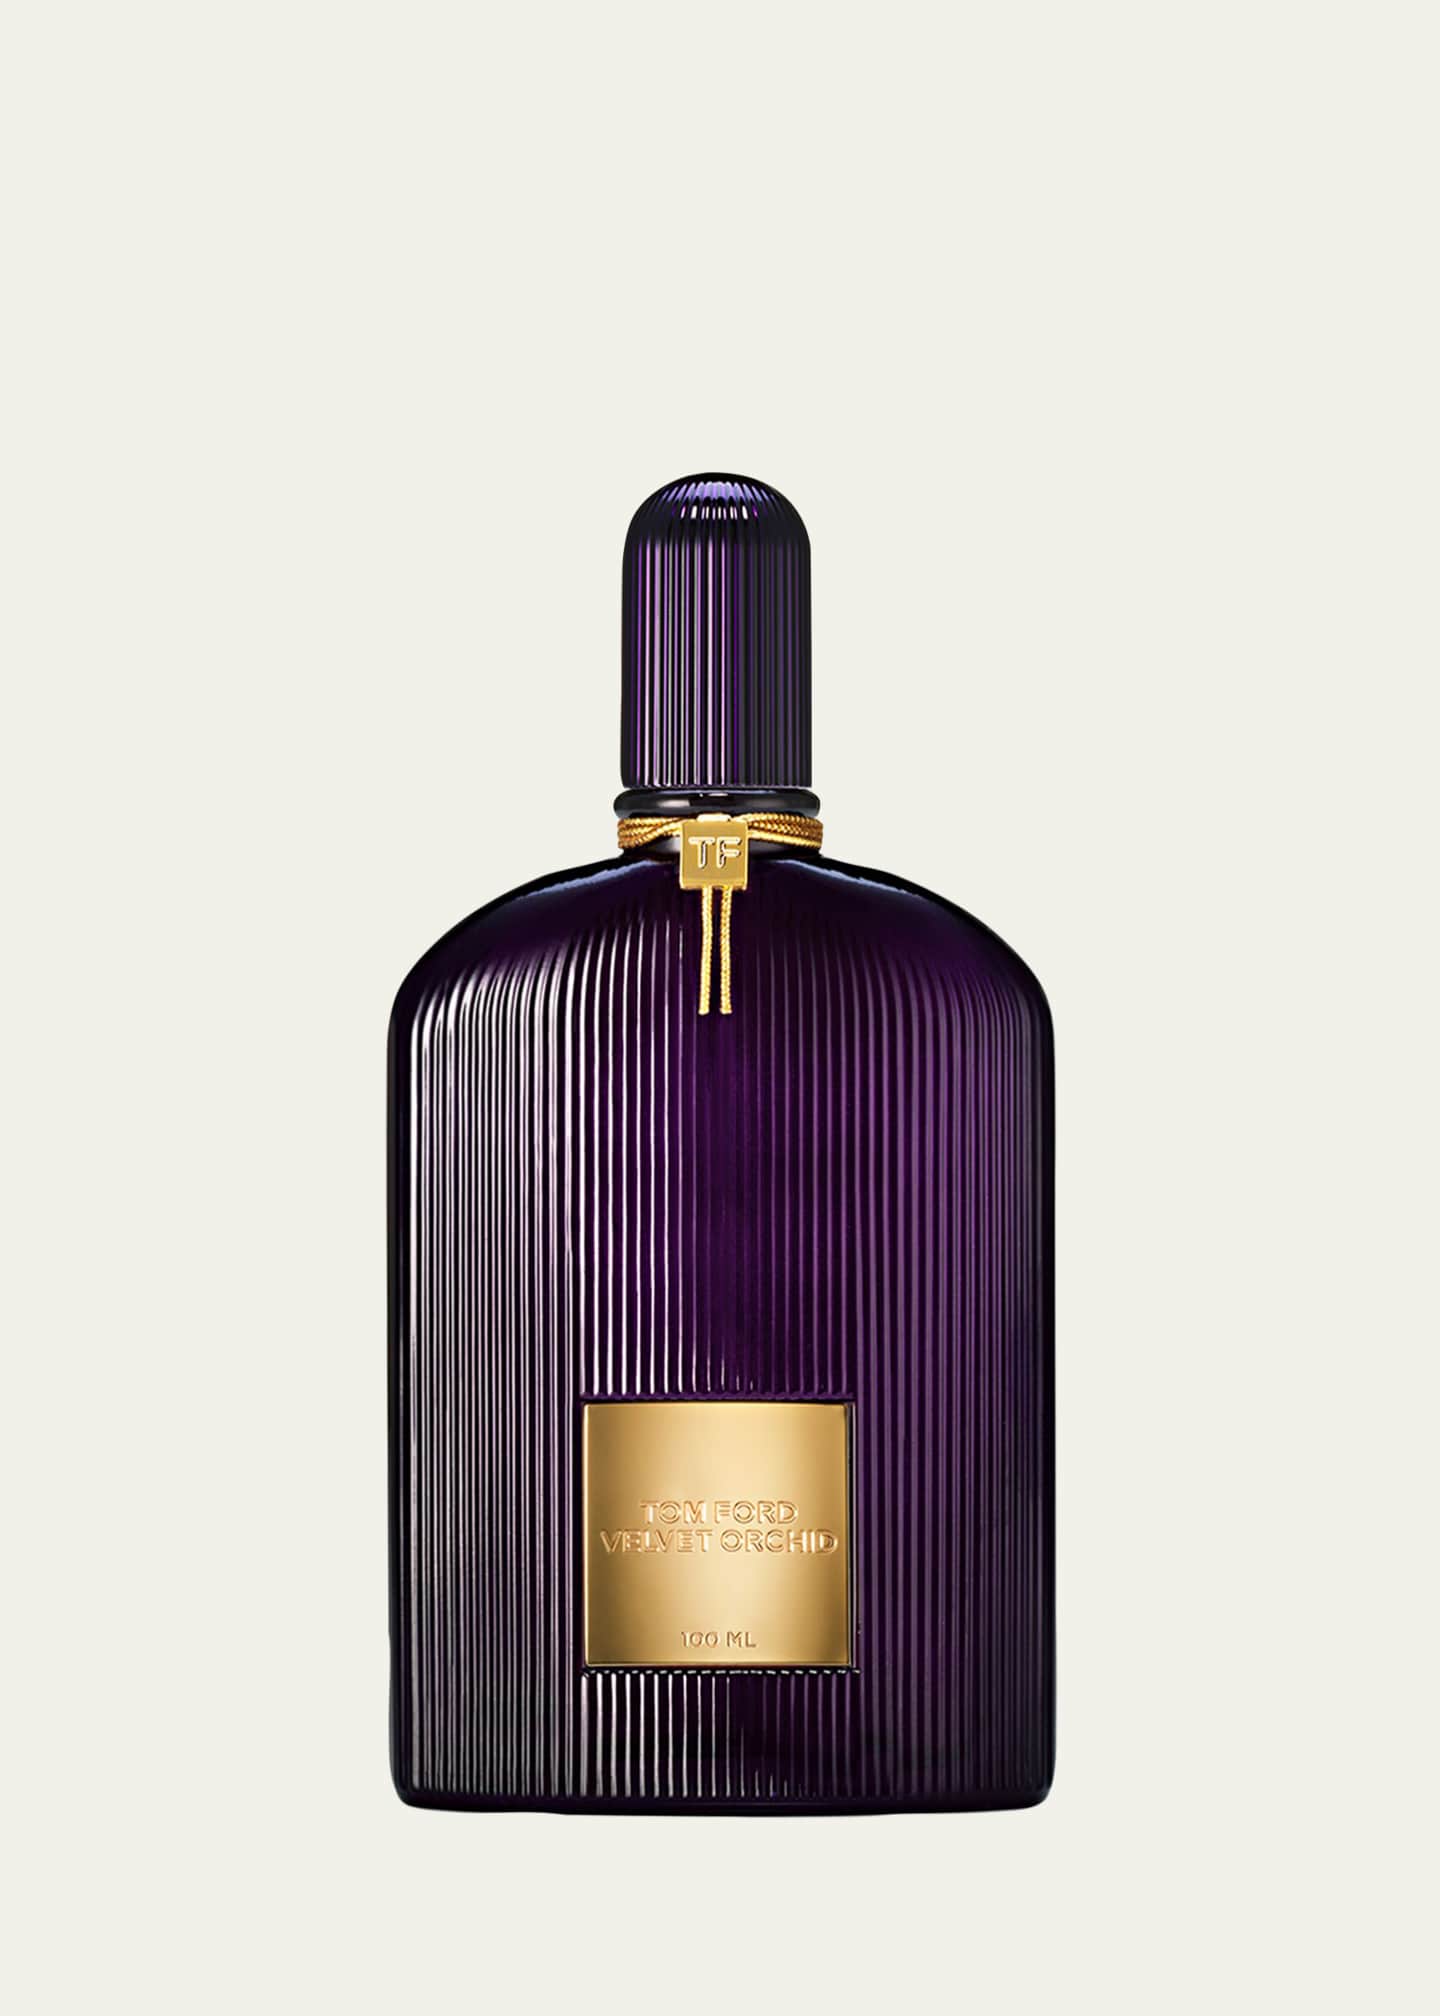 TOM FORD Velvet Orchid Eau de Parfum Fragrance, 3.4 oz - Bergdorf Goodman